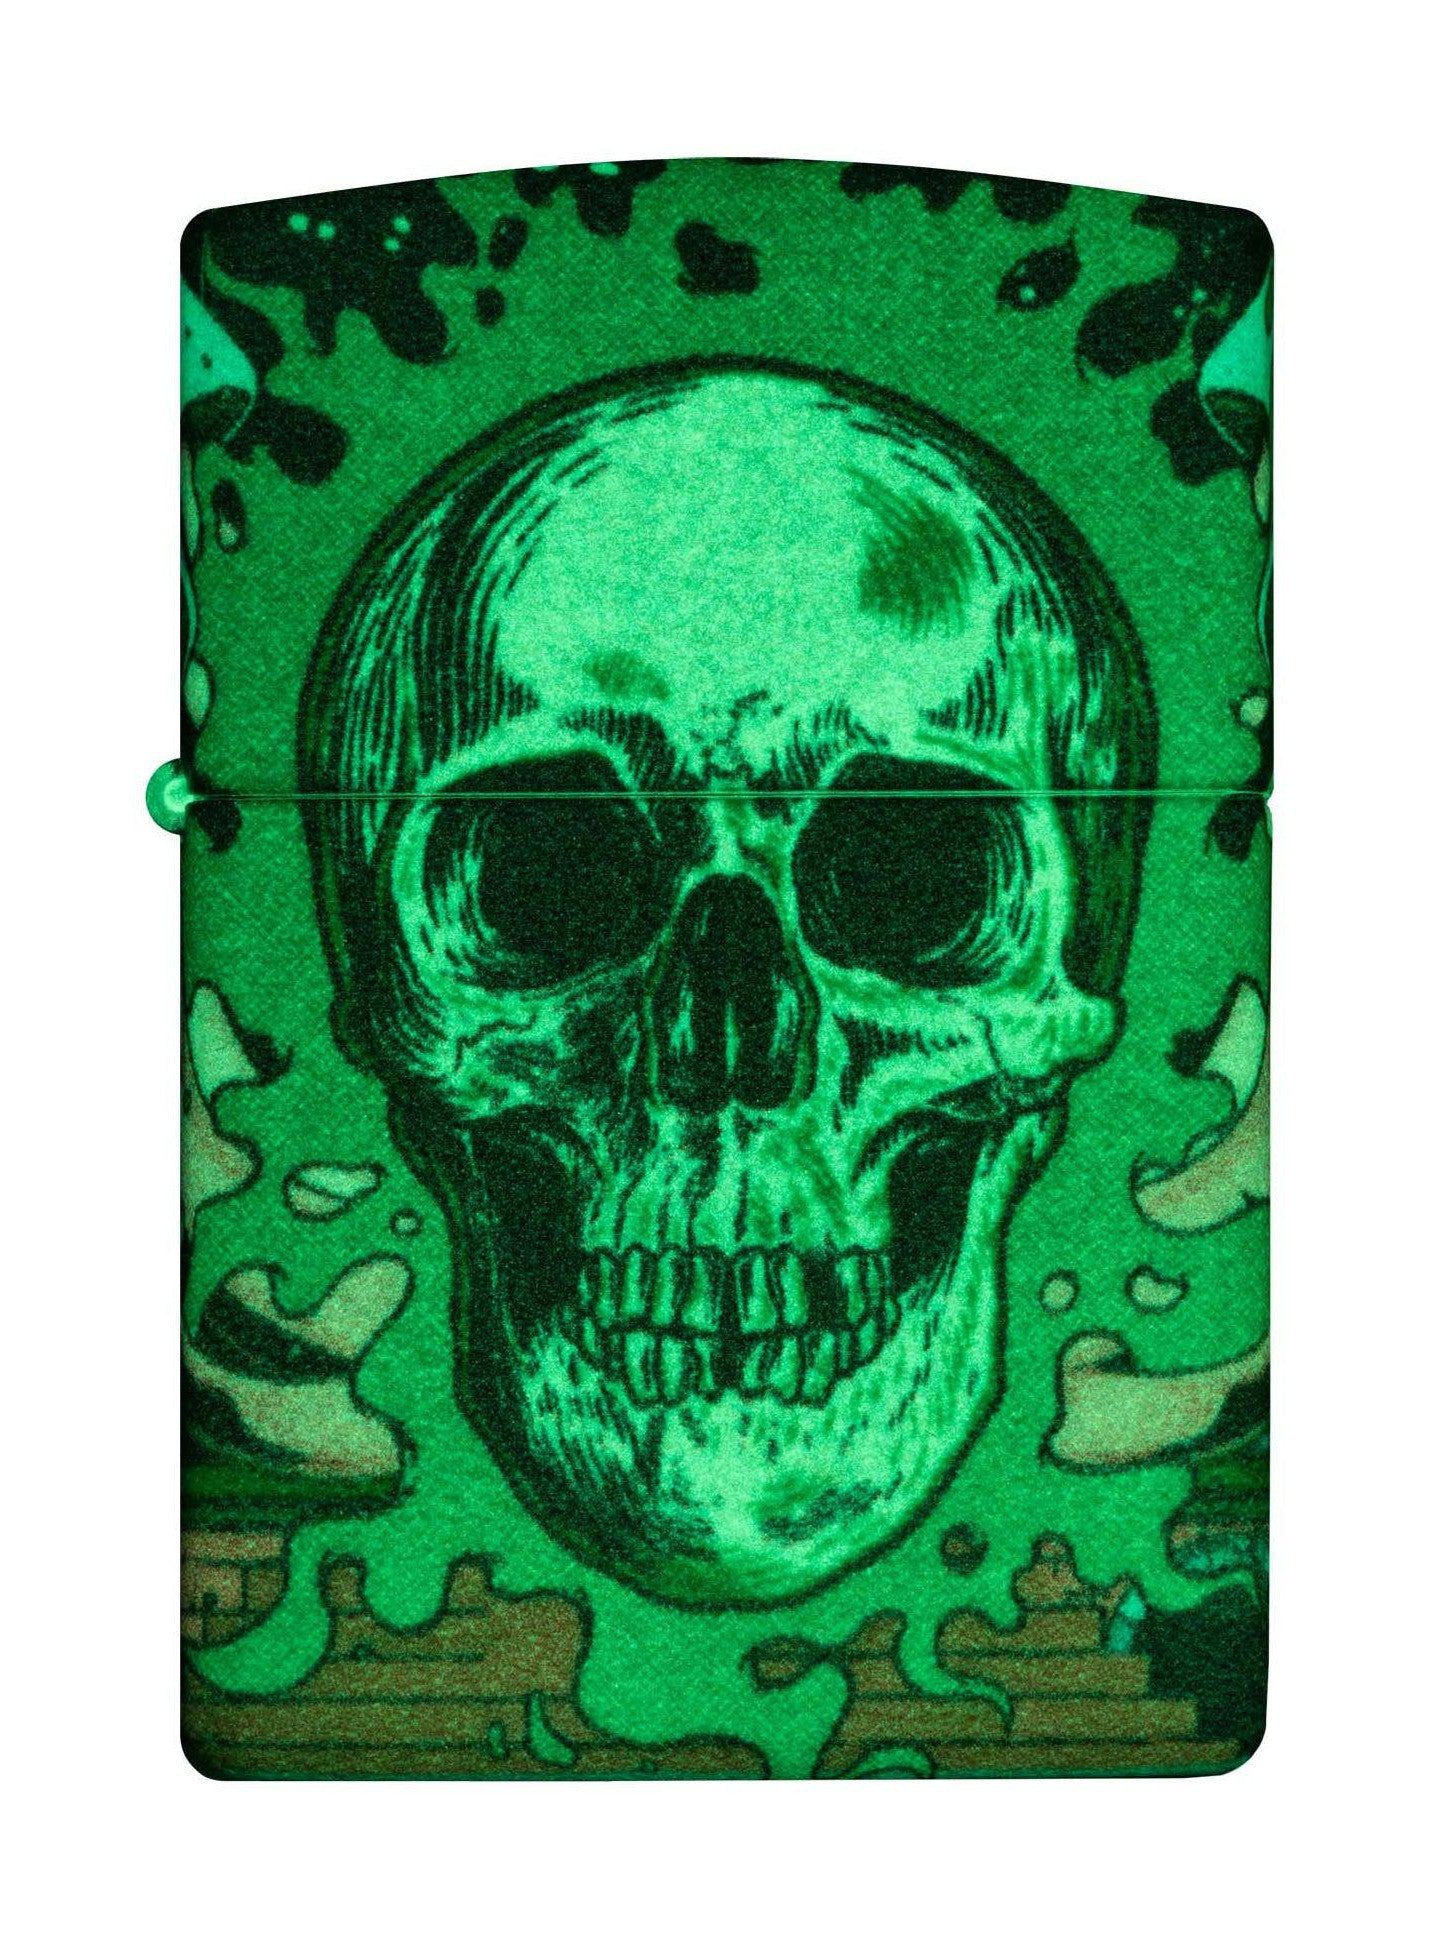 Zippo Lighter: Skull with Mushrooms, Glow in the Dark - 540 Color 48640